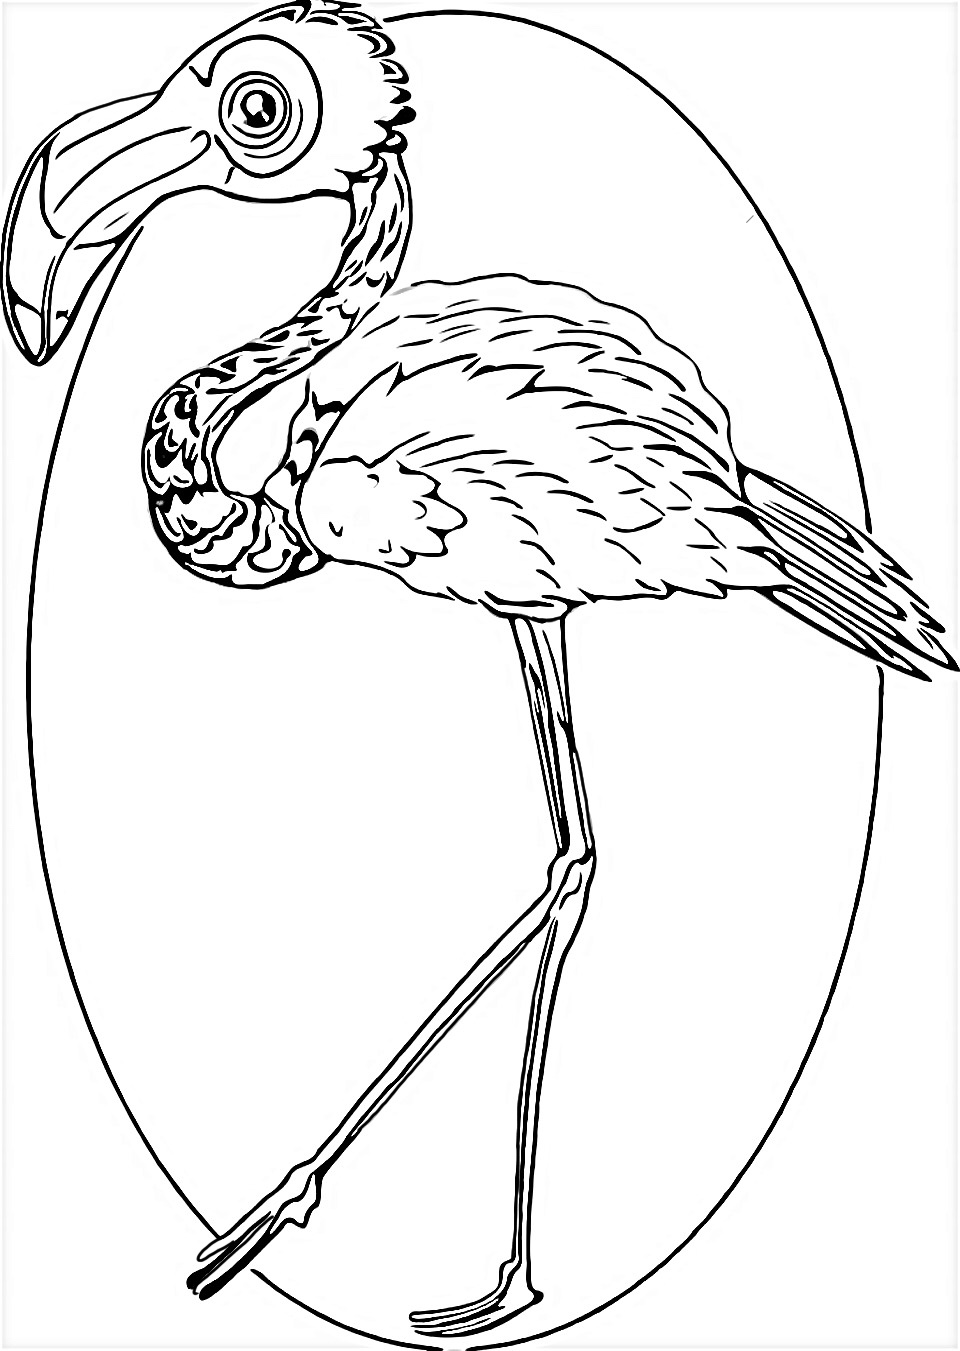 Cartoon Flamingo